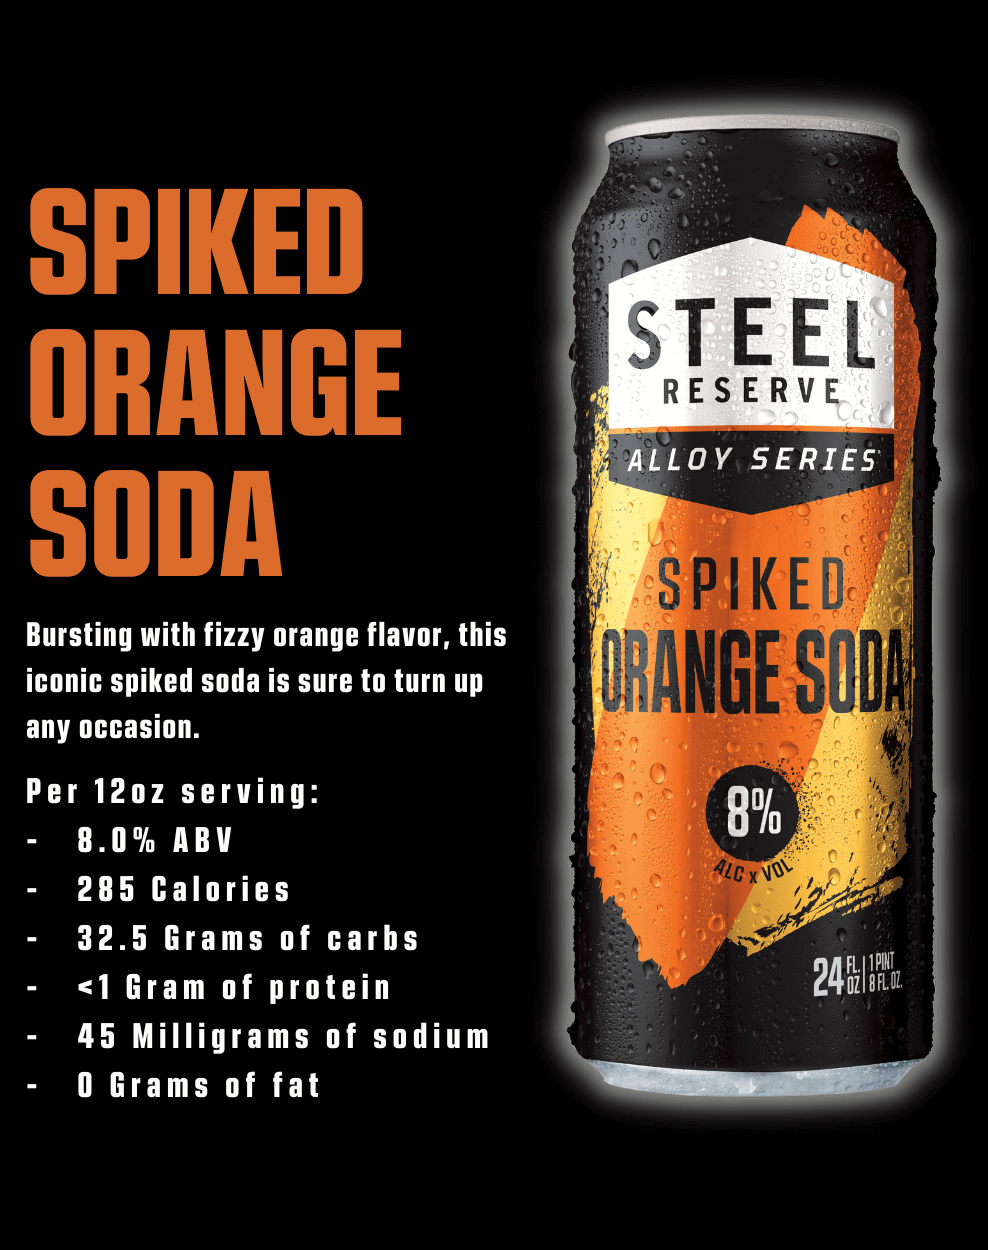 Spiked Orange Soda description